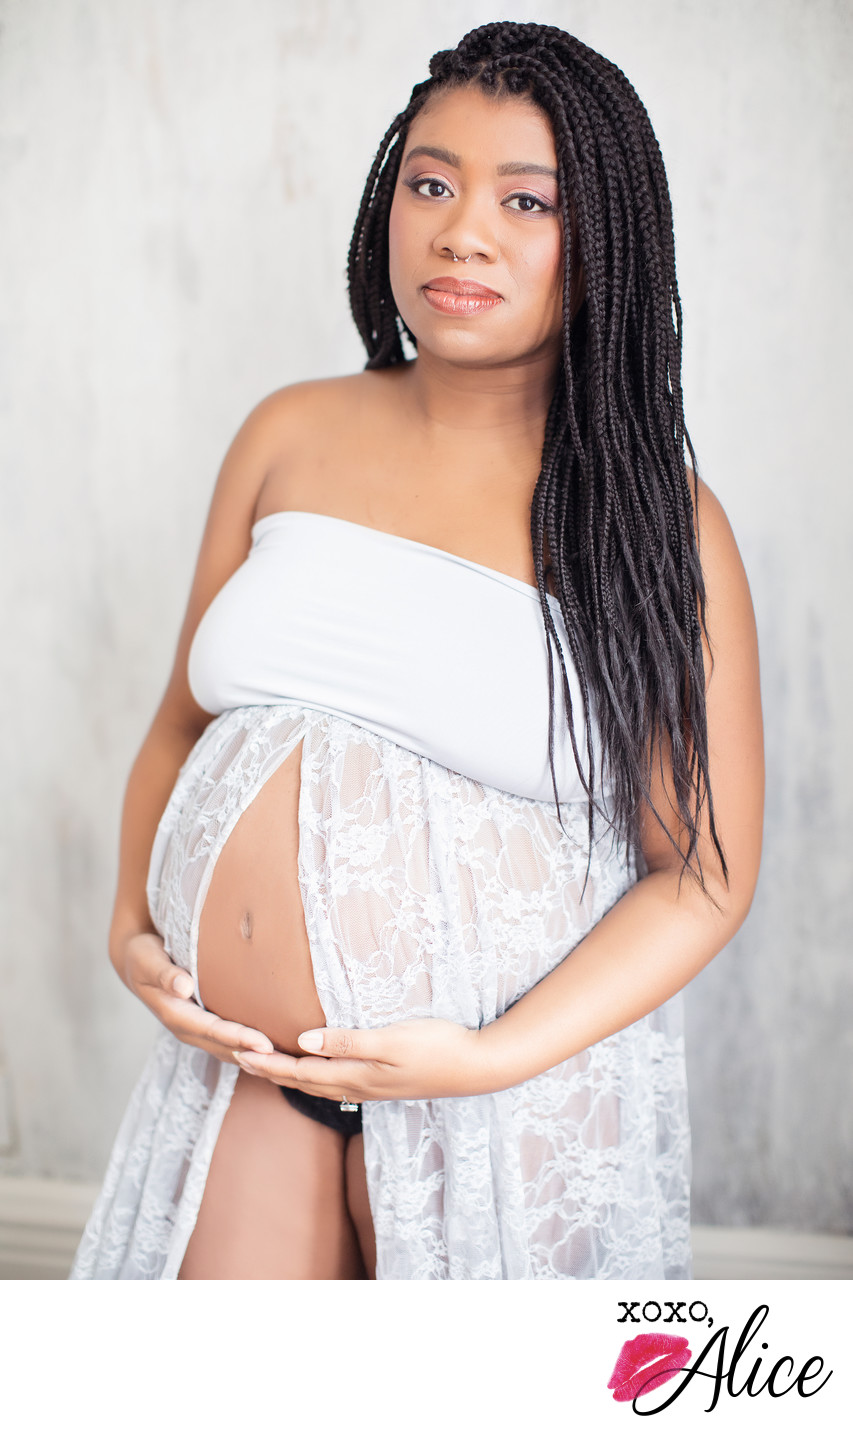 powerful maternity photography goddess mother photos